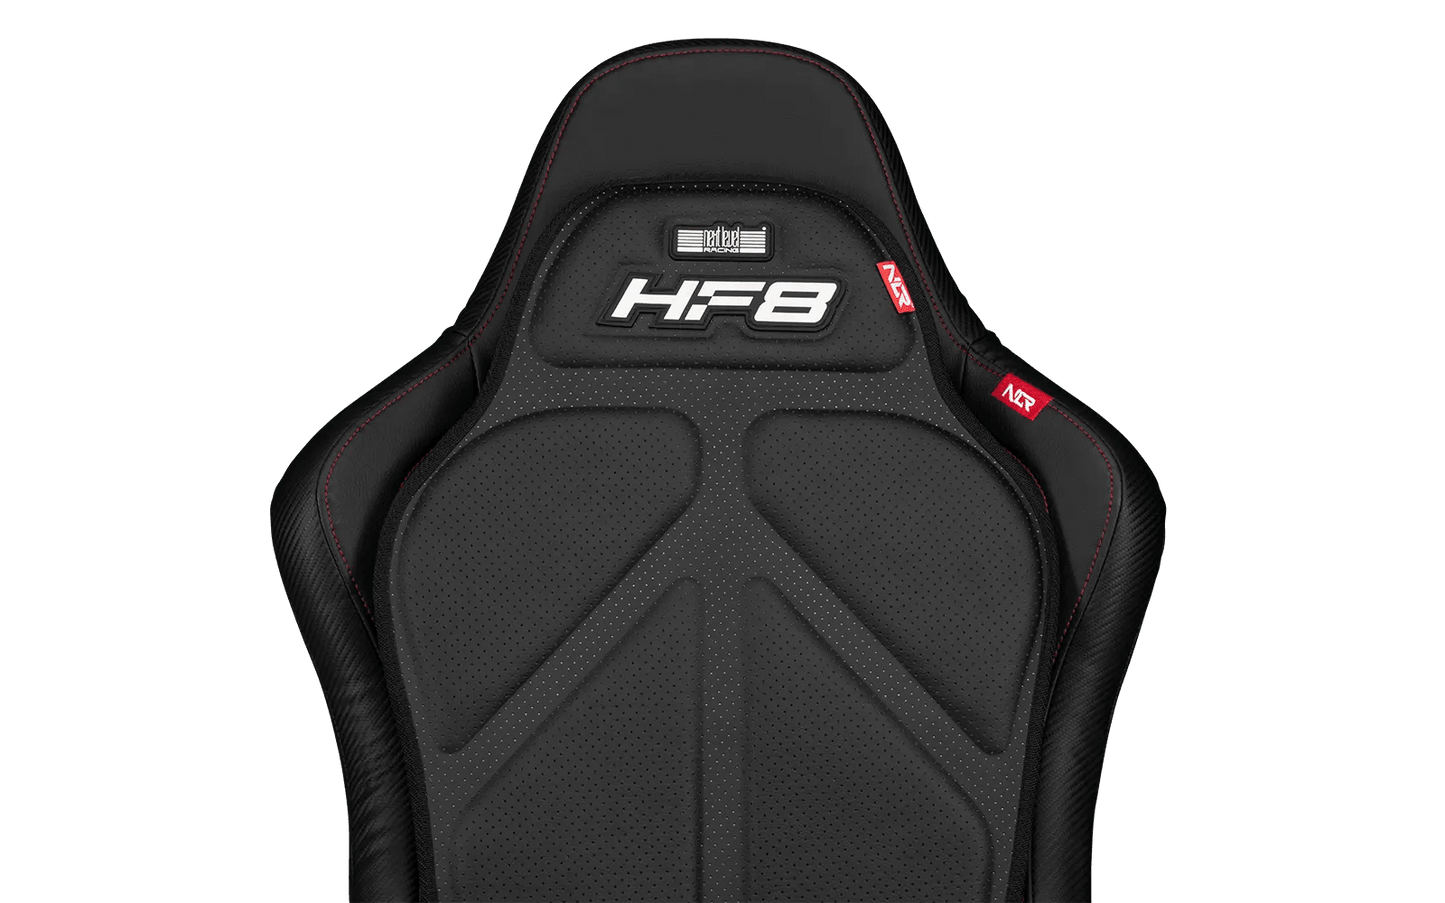 Next Level Racing HF8 Haptic Feedback Gaming Pad